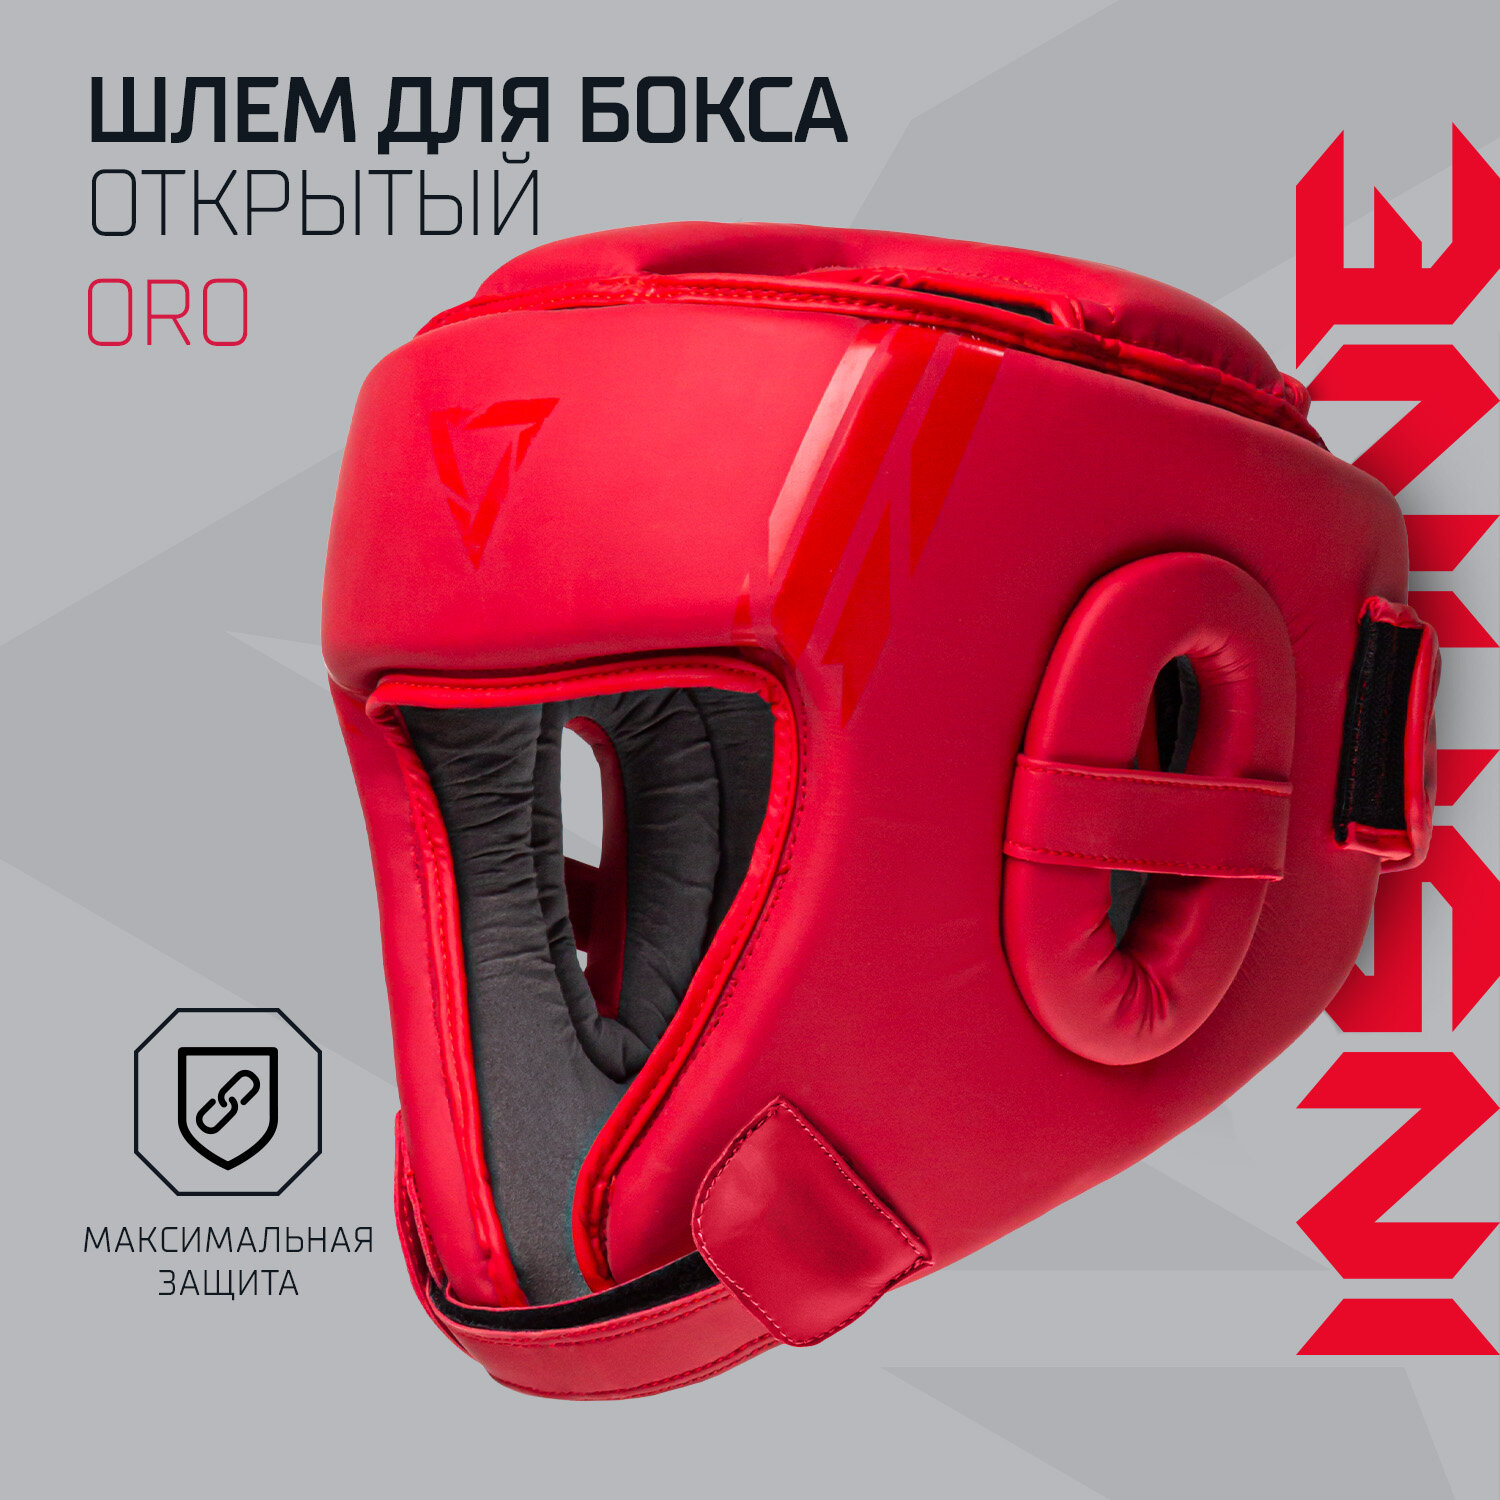 Шлем открытый INSANE ORO IN23-HG300, ПУ, красный, размер L